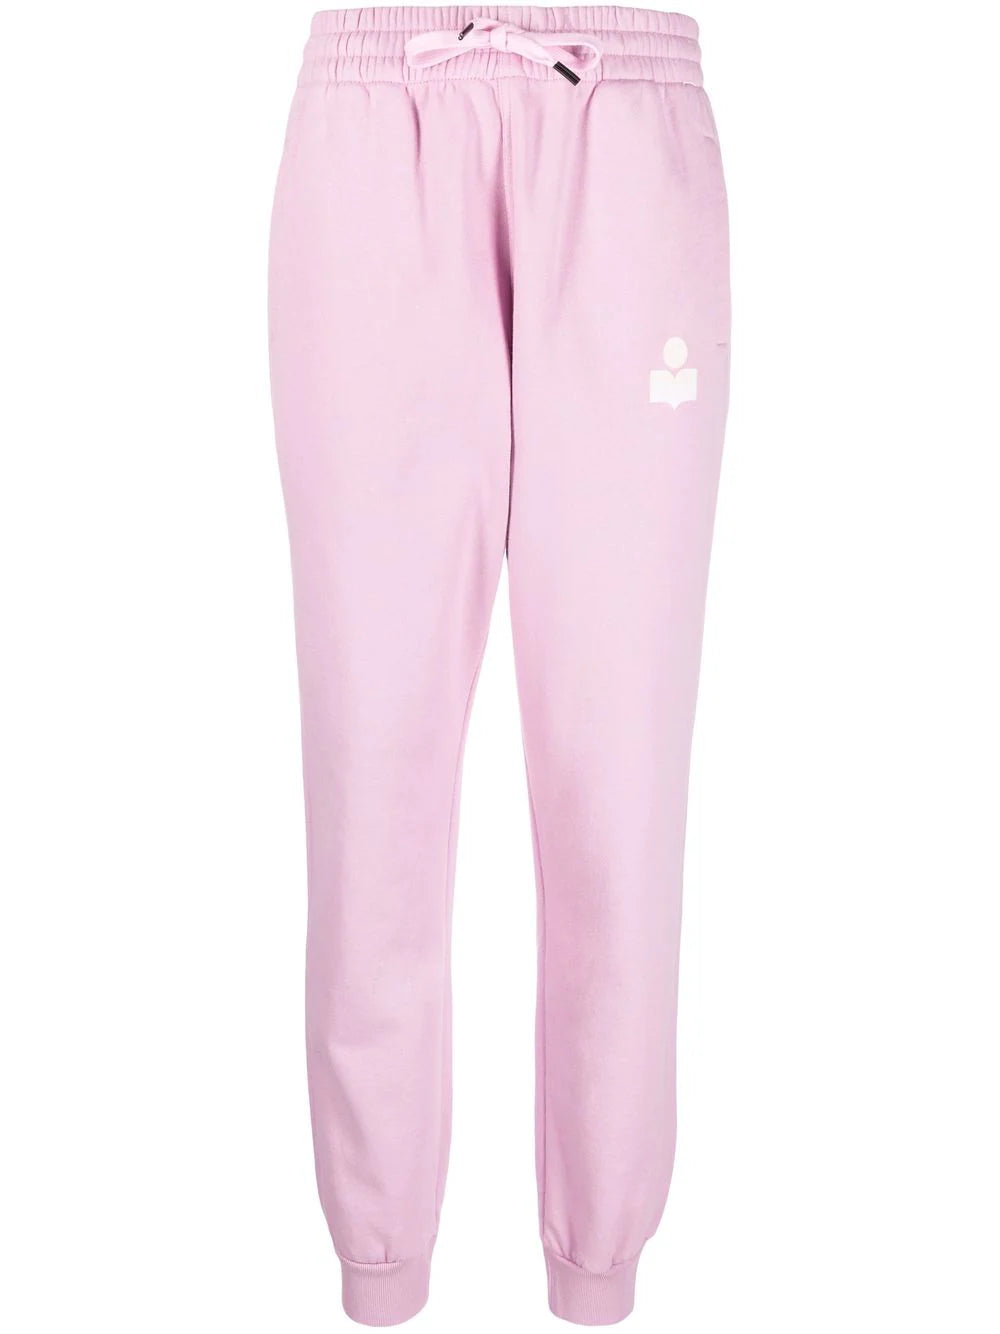 Etoile pantalon malonae - pink